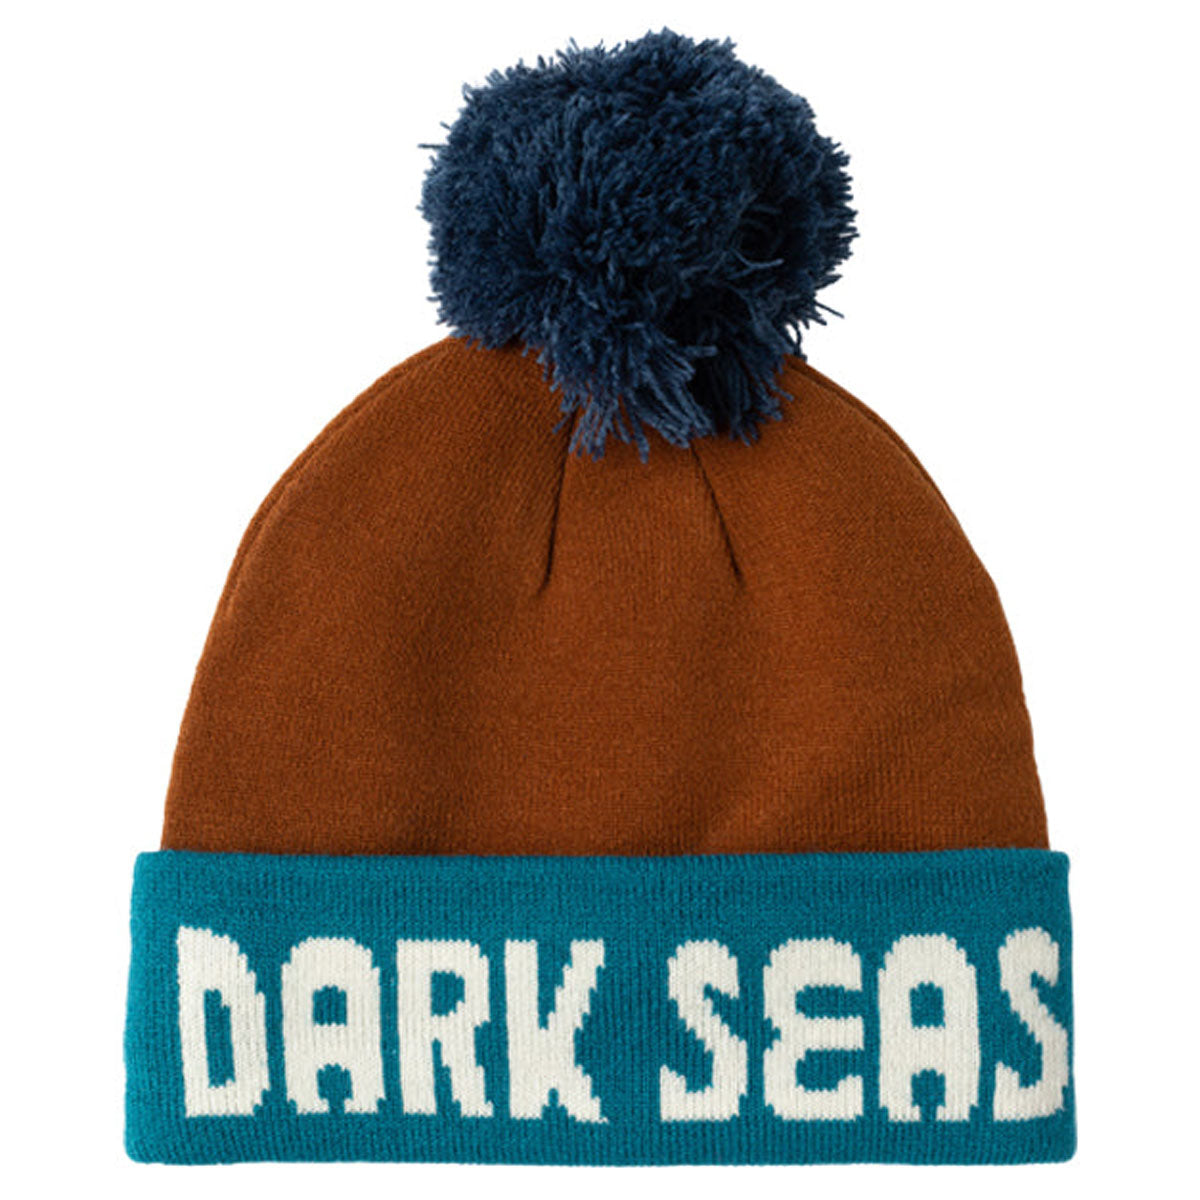 Dark Seas Azure Beanie - Ginger/Teal image 2